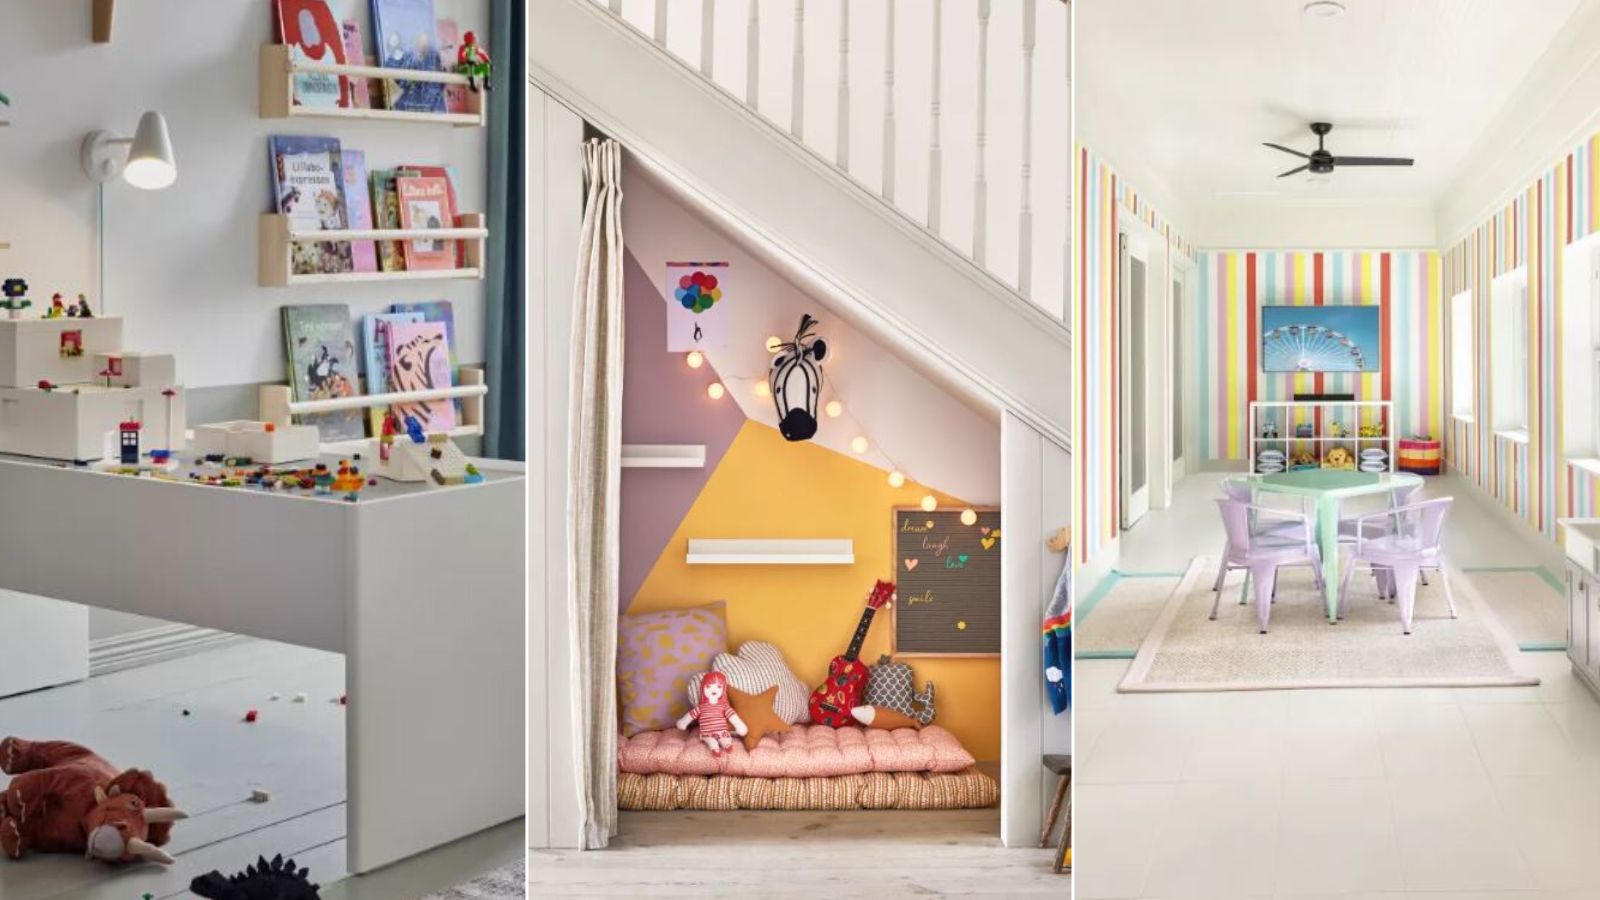 Fun and creative shared bedroom ideas for kids - IKEA